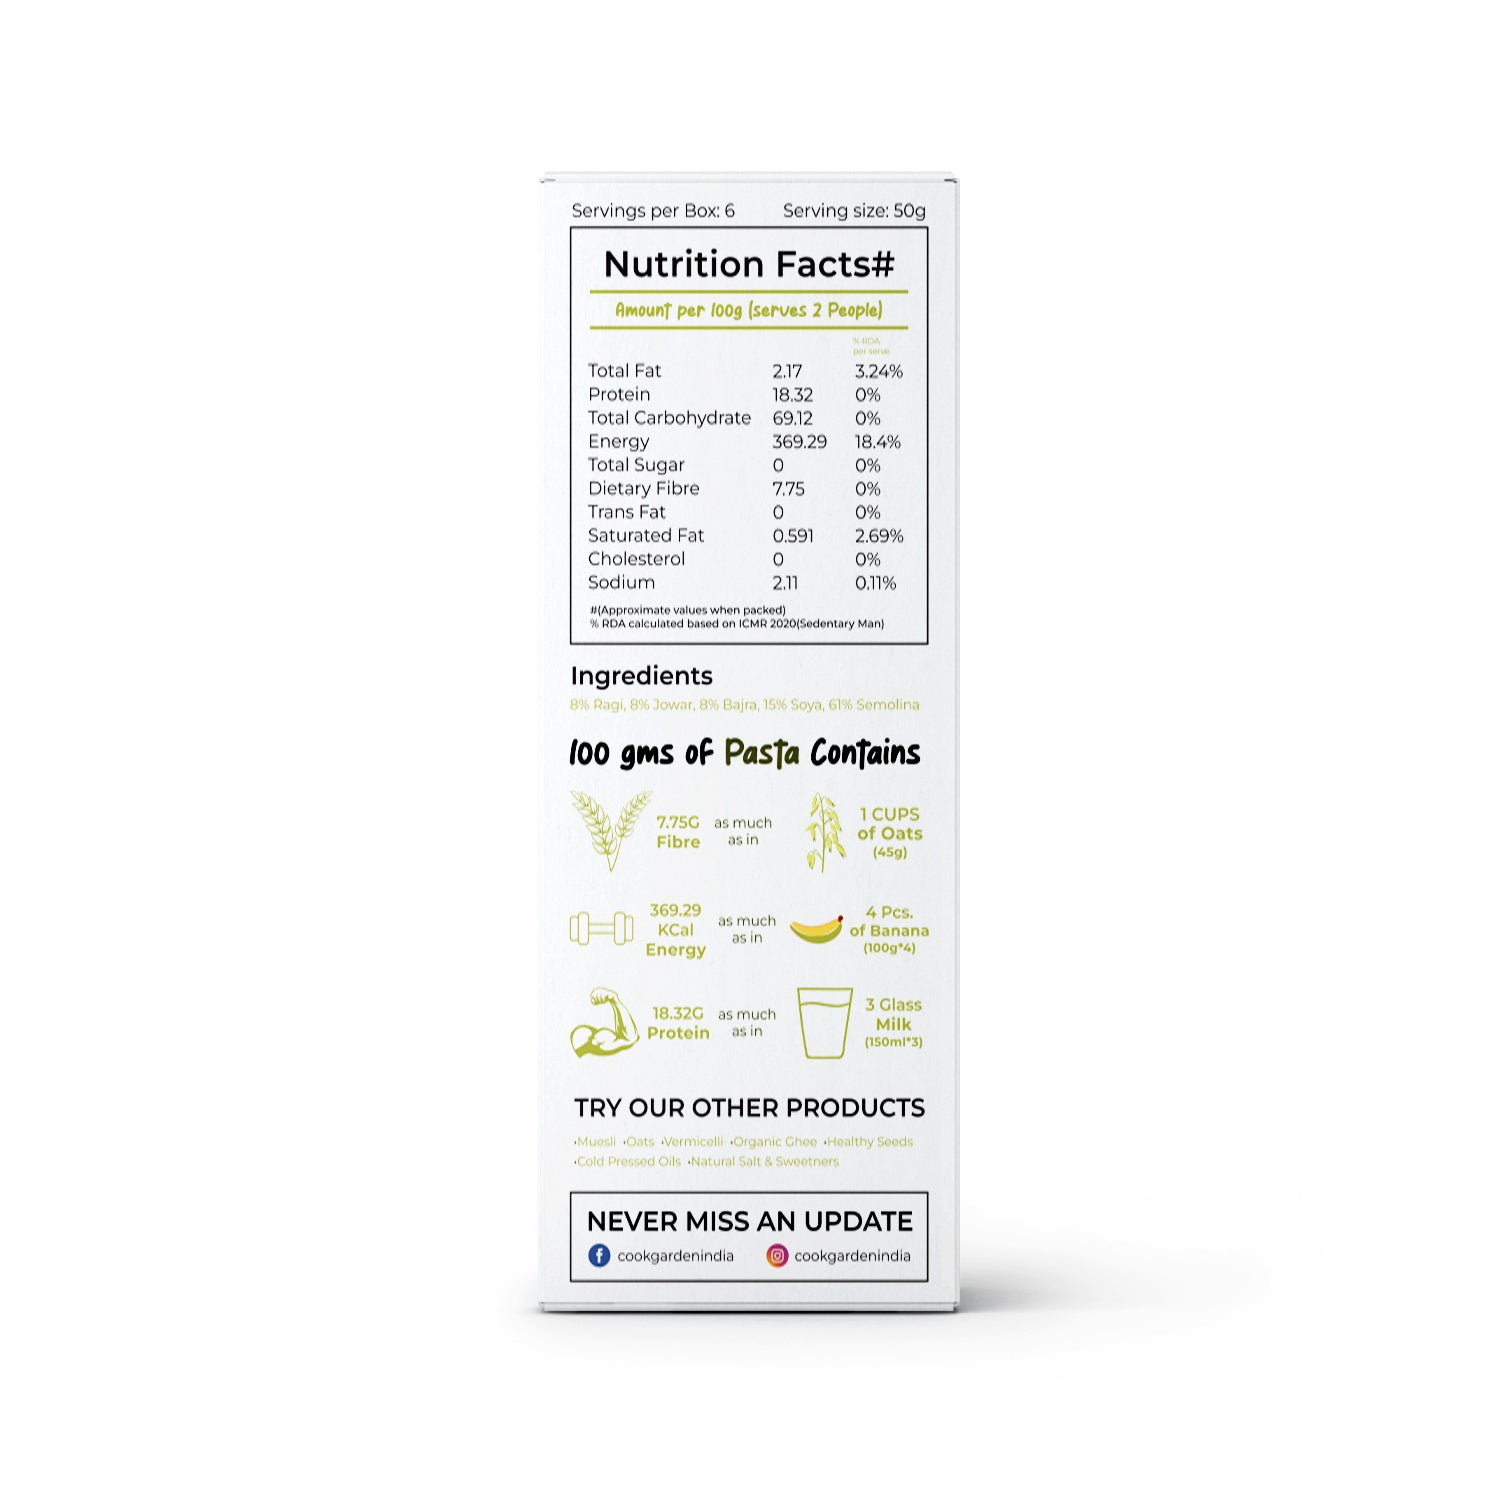 MultiGrain Macaroni Pasta | No Maida | made with Multigrain | High Protein & Fiber, 300g